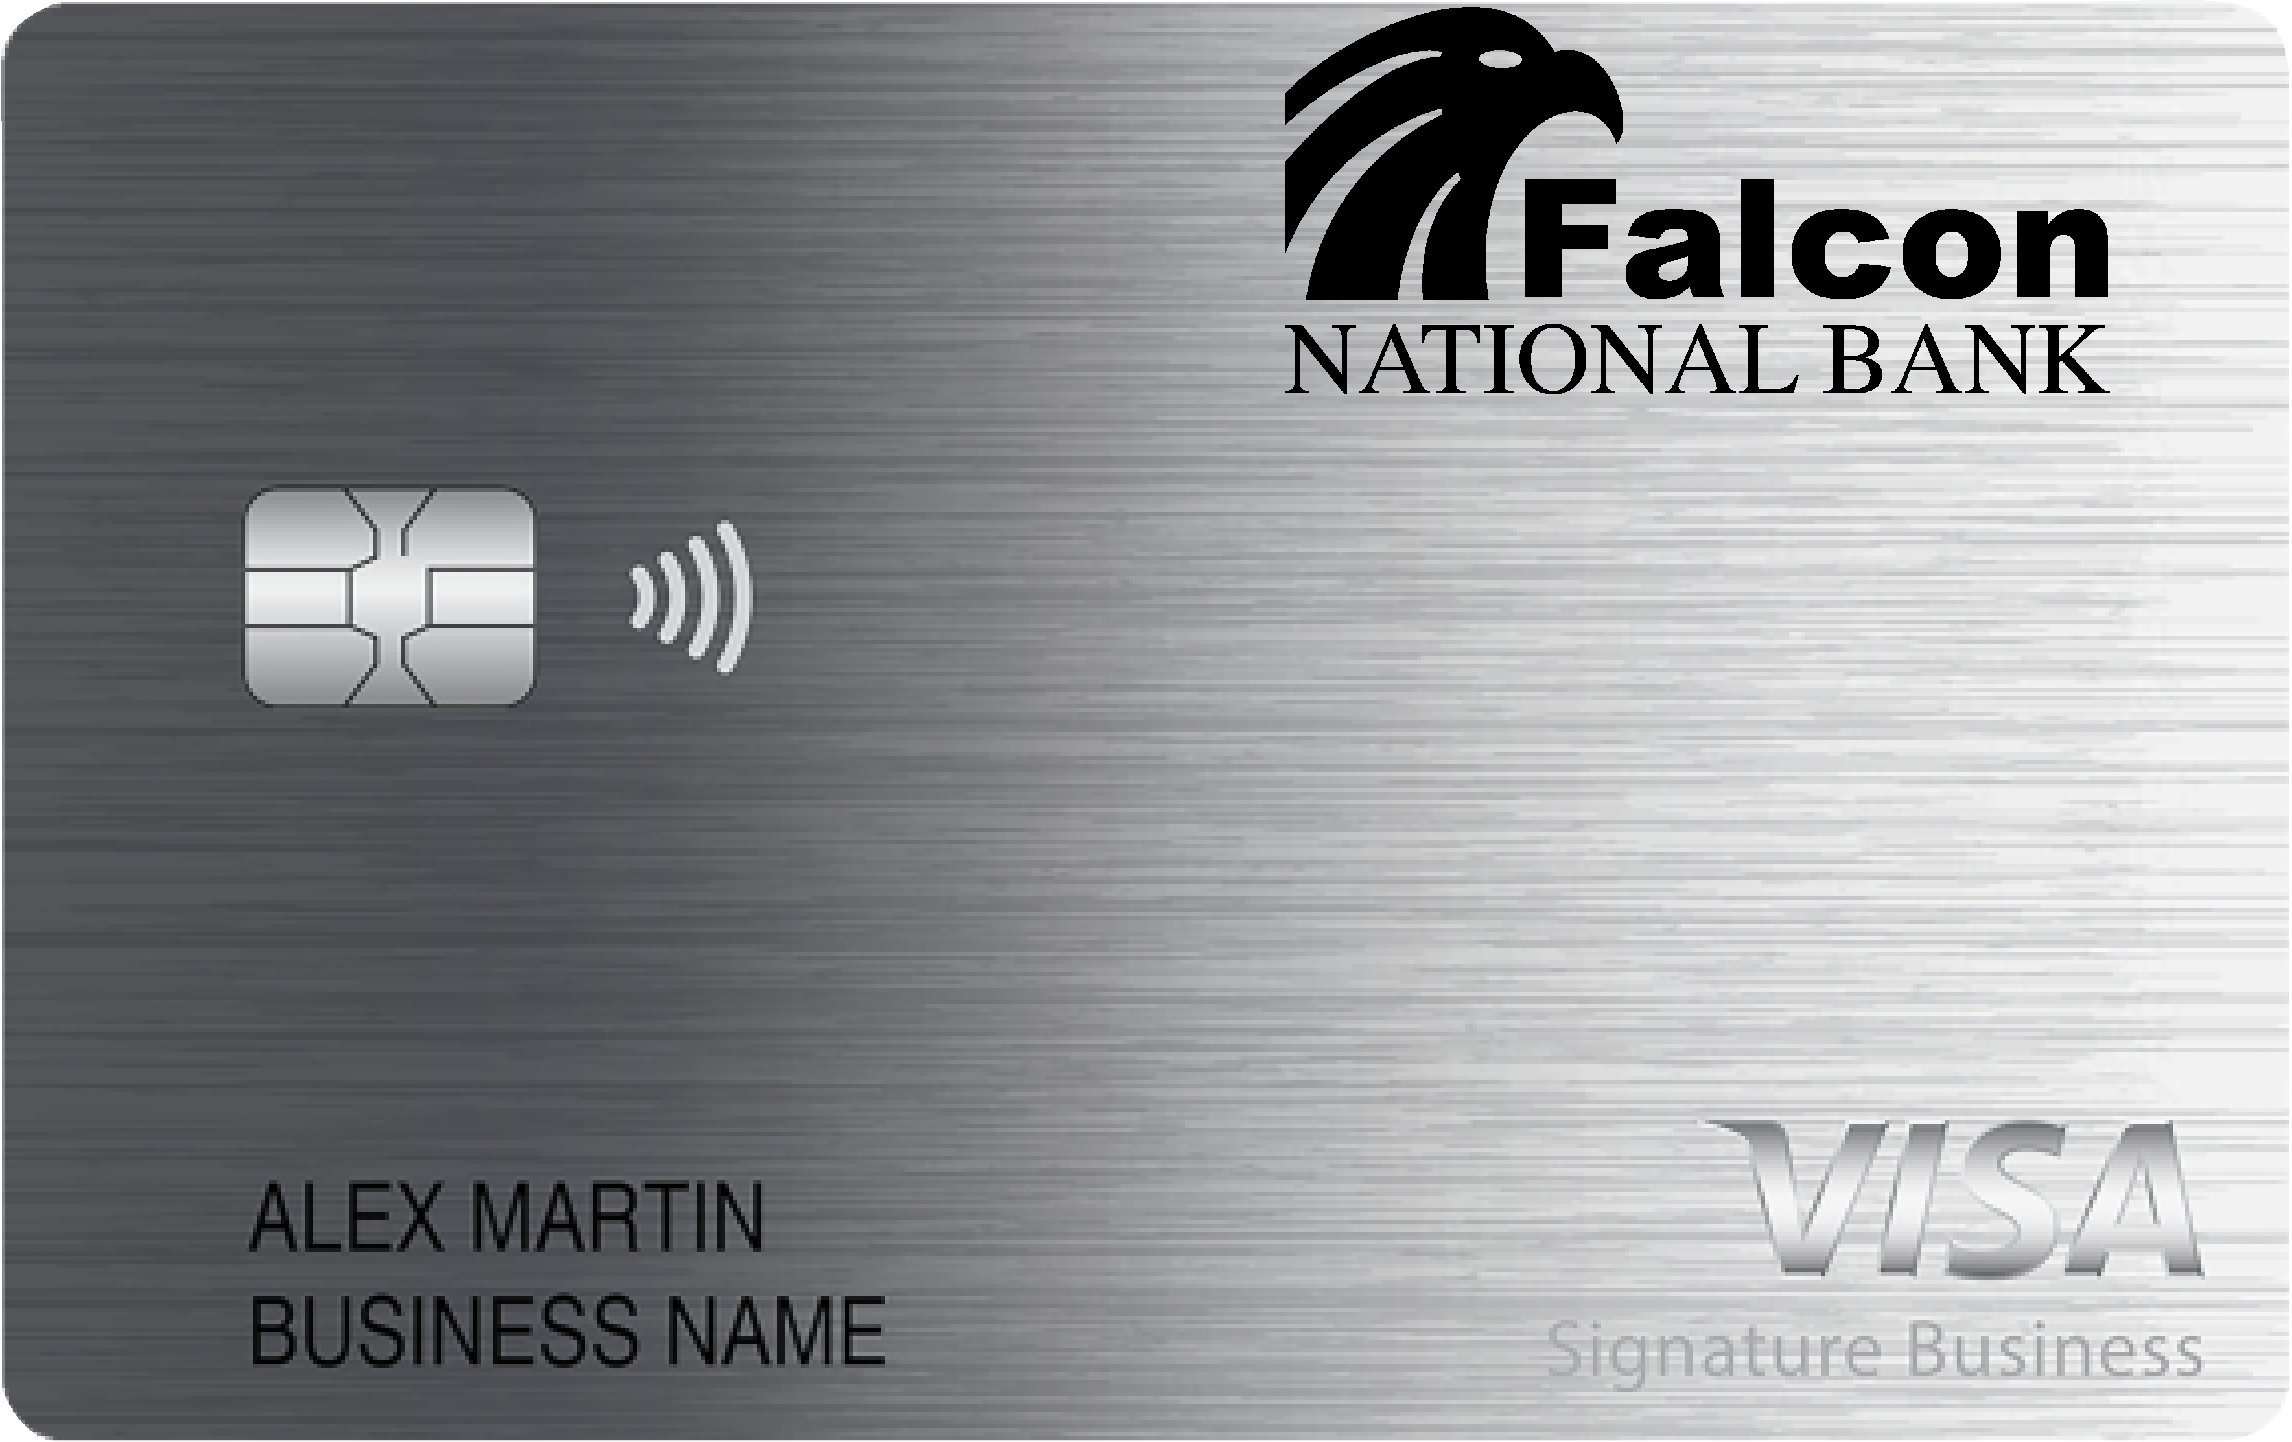 Falcon National Bank Smart Business Rewards Card